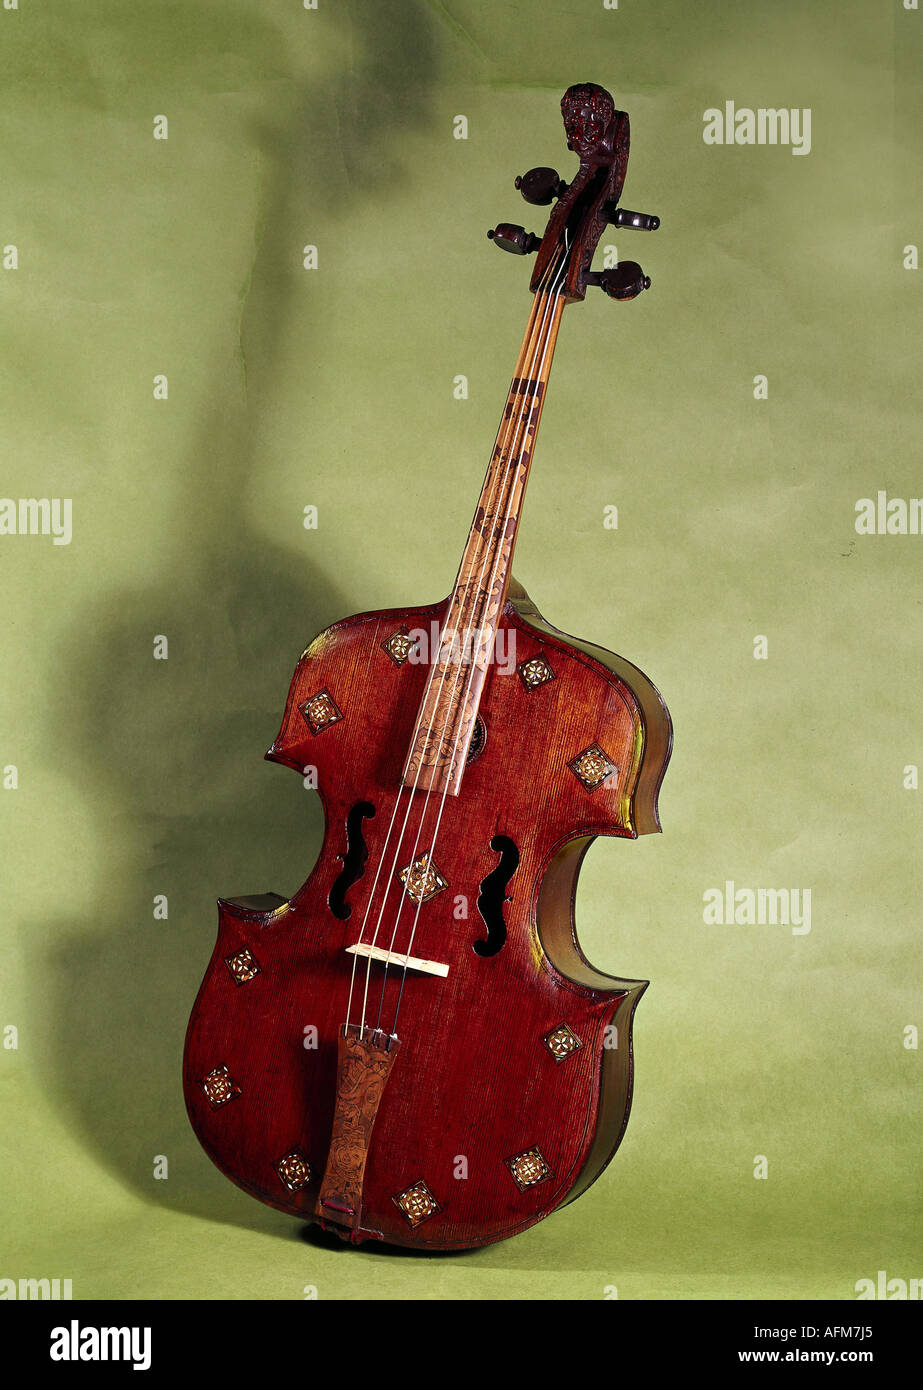 music, instruments, Viola da Gamba, by Russo Domenico, 16th century,  Tiroler Landeskundliches Museum, Innsbruch, Austria, instrument, historic,  historical Stock Photo - Alamy